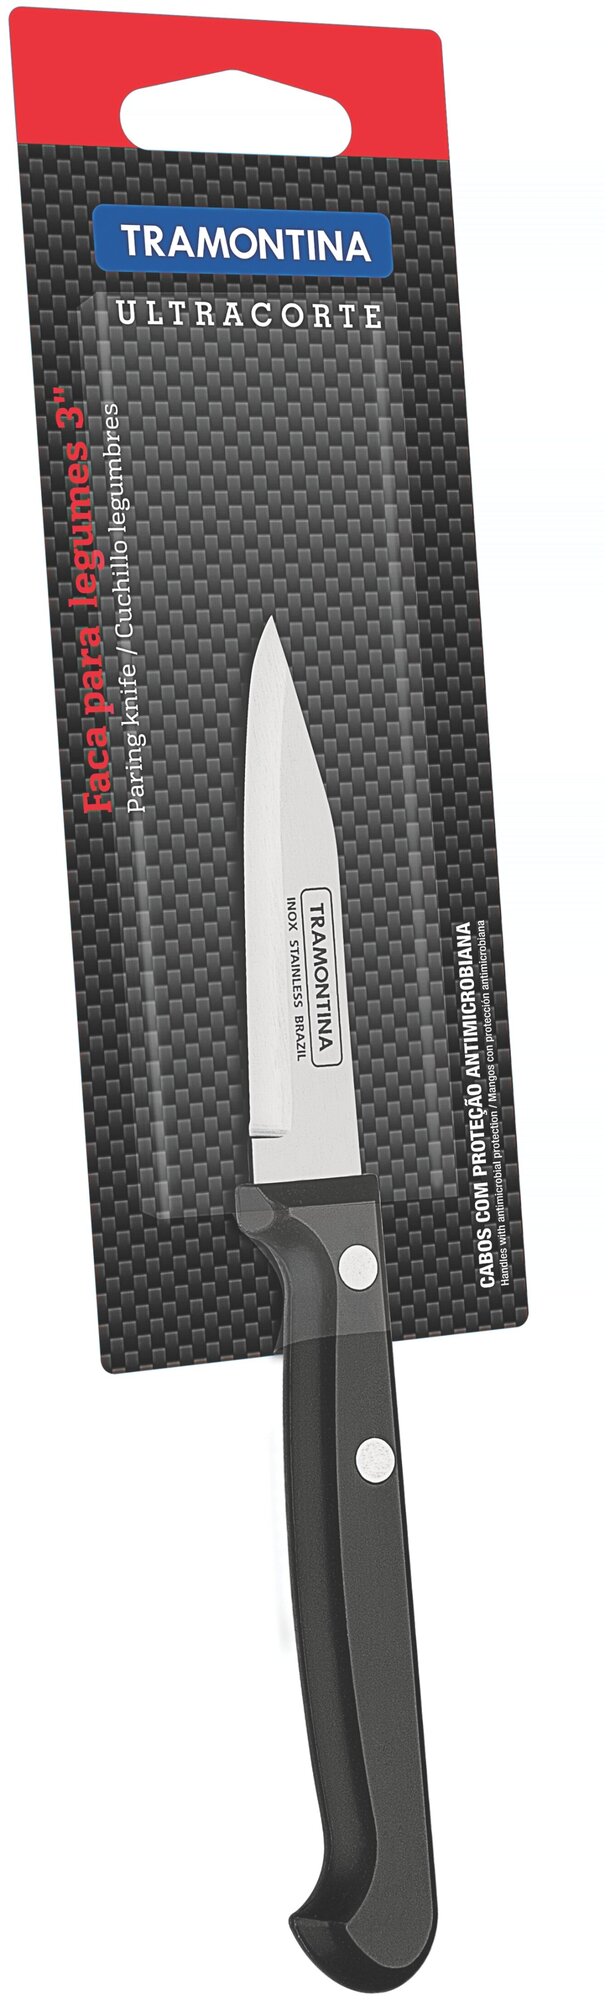 Нож кухонный Tramontina Ultracorte для очистки овощей 7,5 см